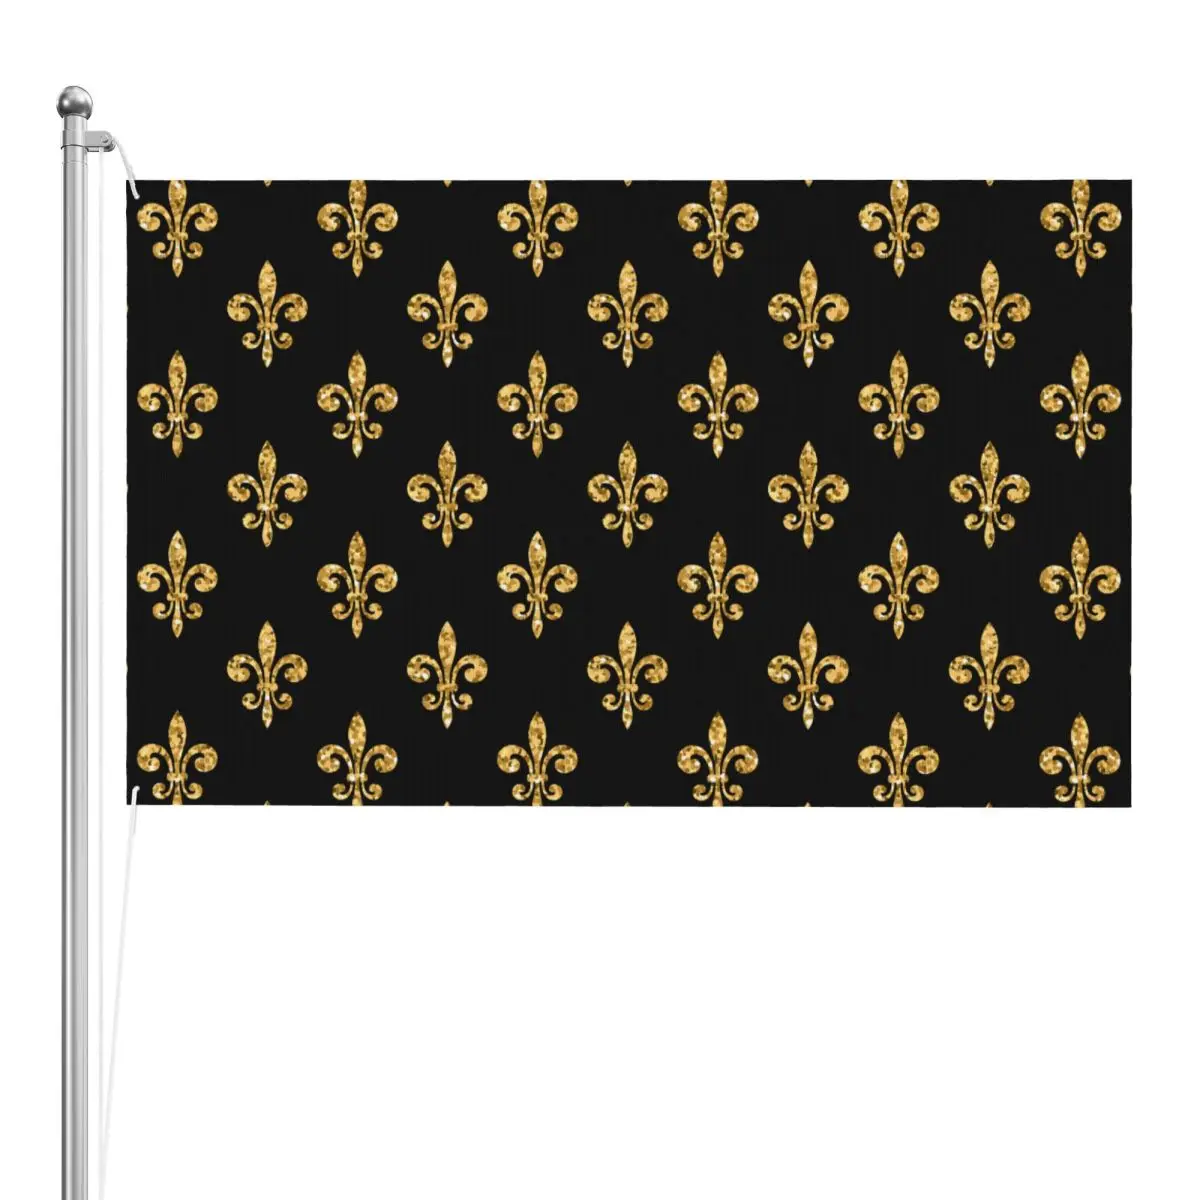 

5x8 Ft Polyester Double Sided Flag Golden Fleur De Lis 152*244cm Two Side Flag for Outdoor Flying & Indoor Decor